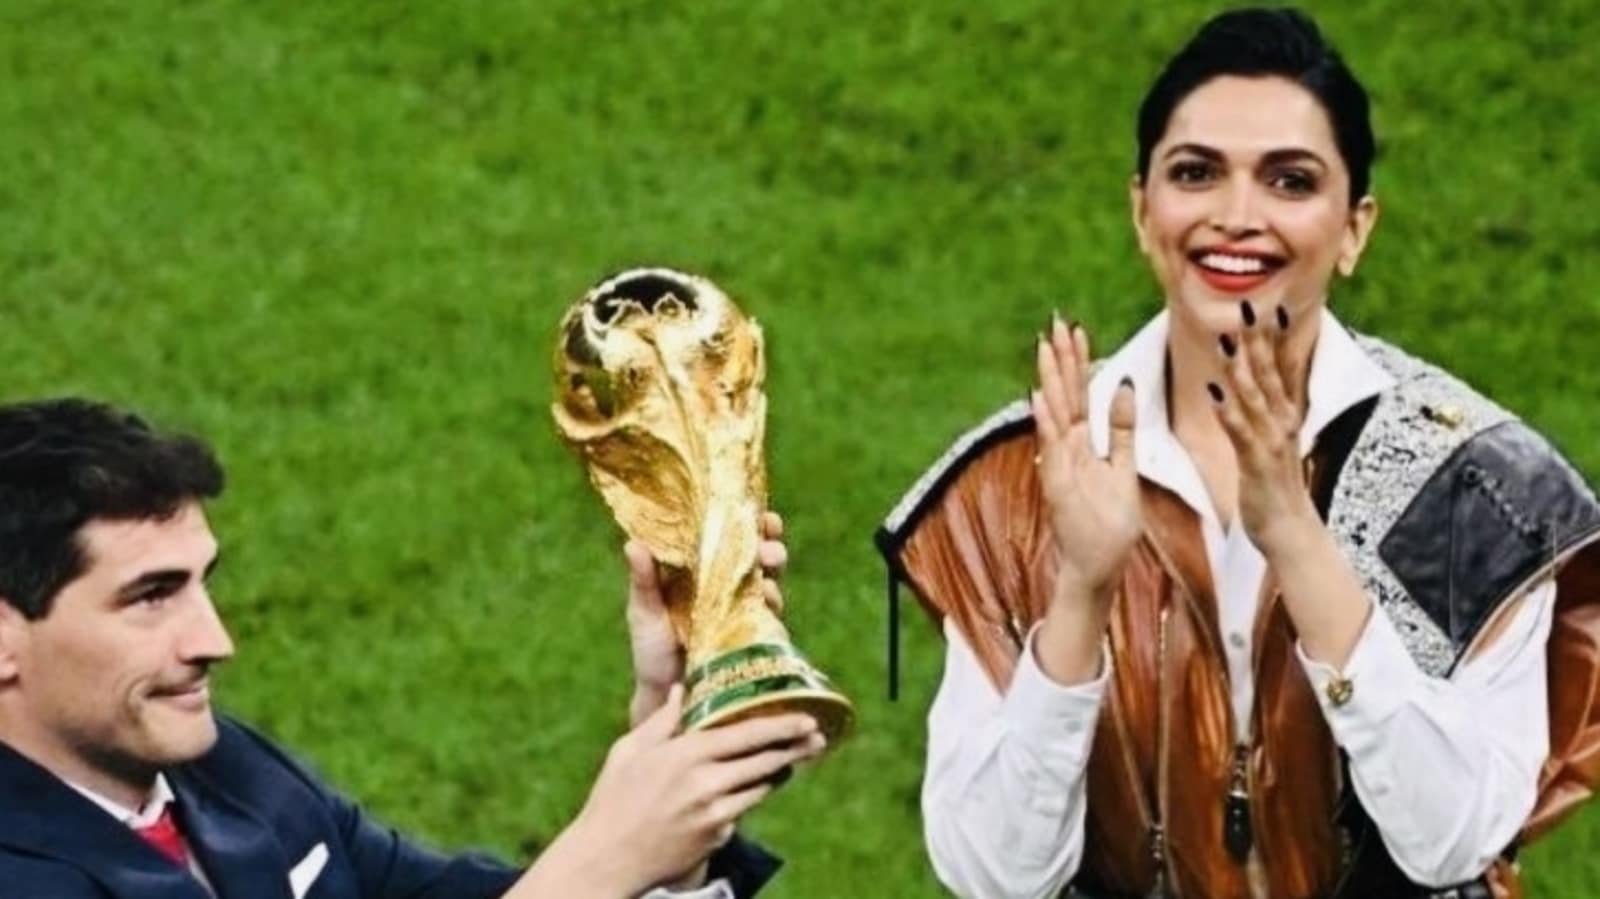 Deepika Padukone looked fashionable as she made history at the FIFA finals